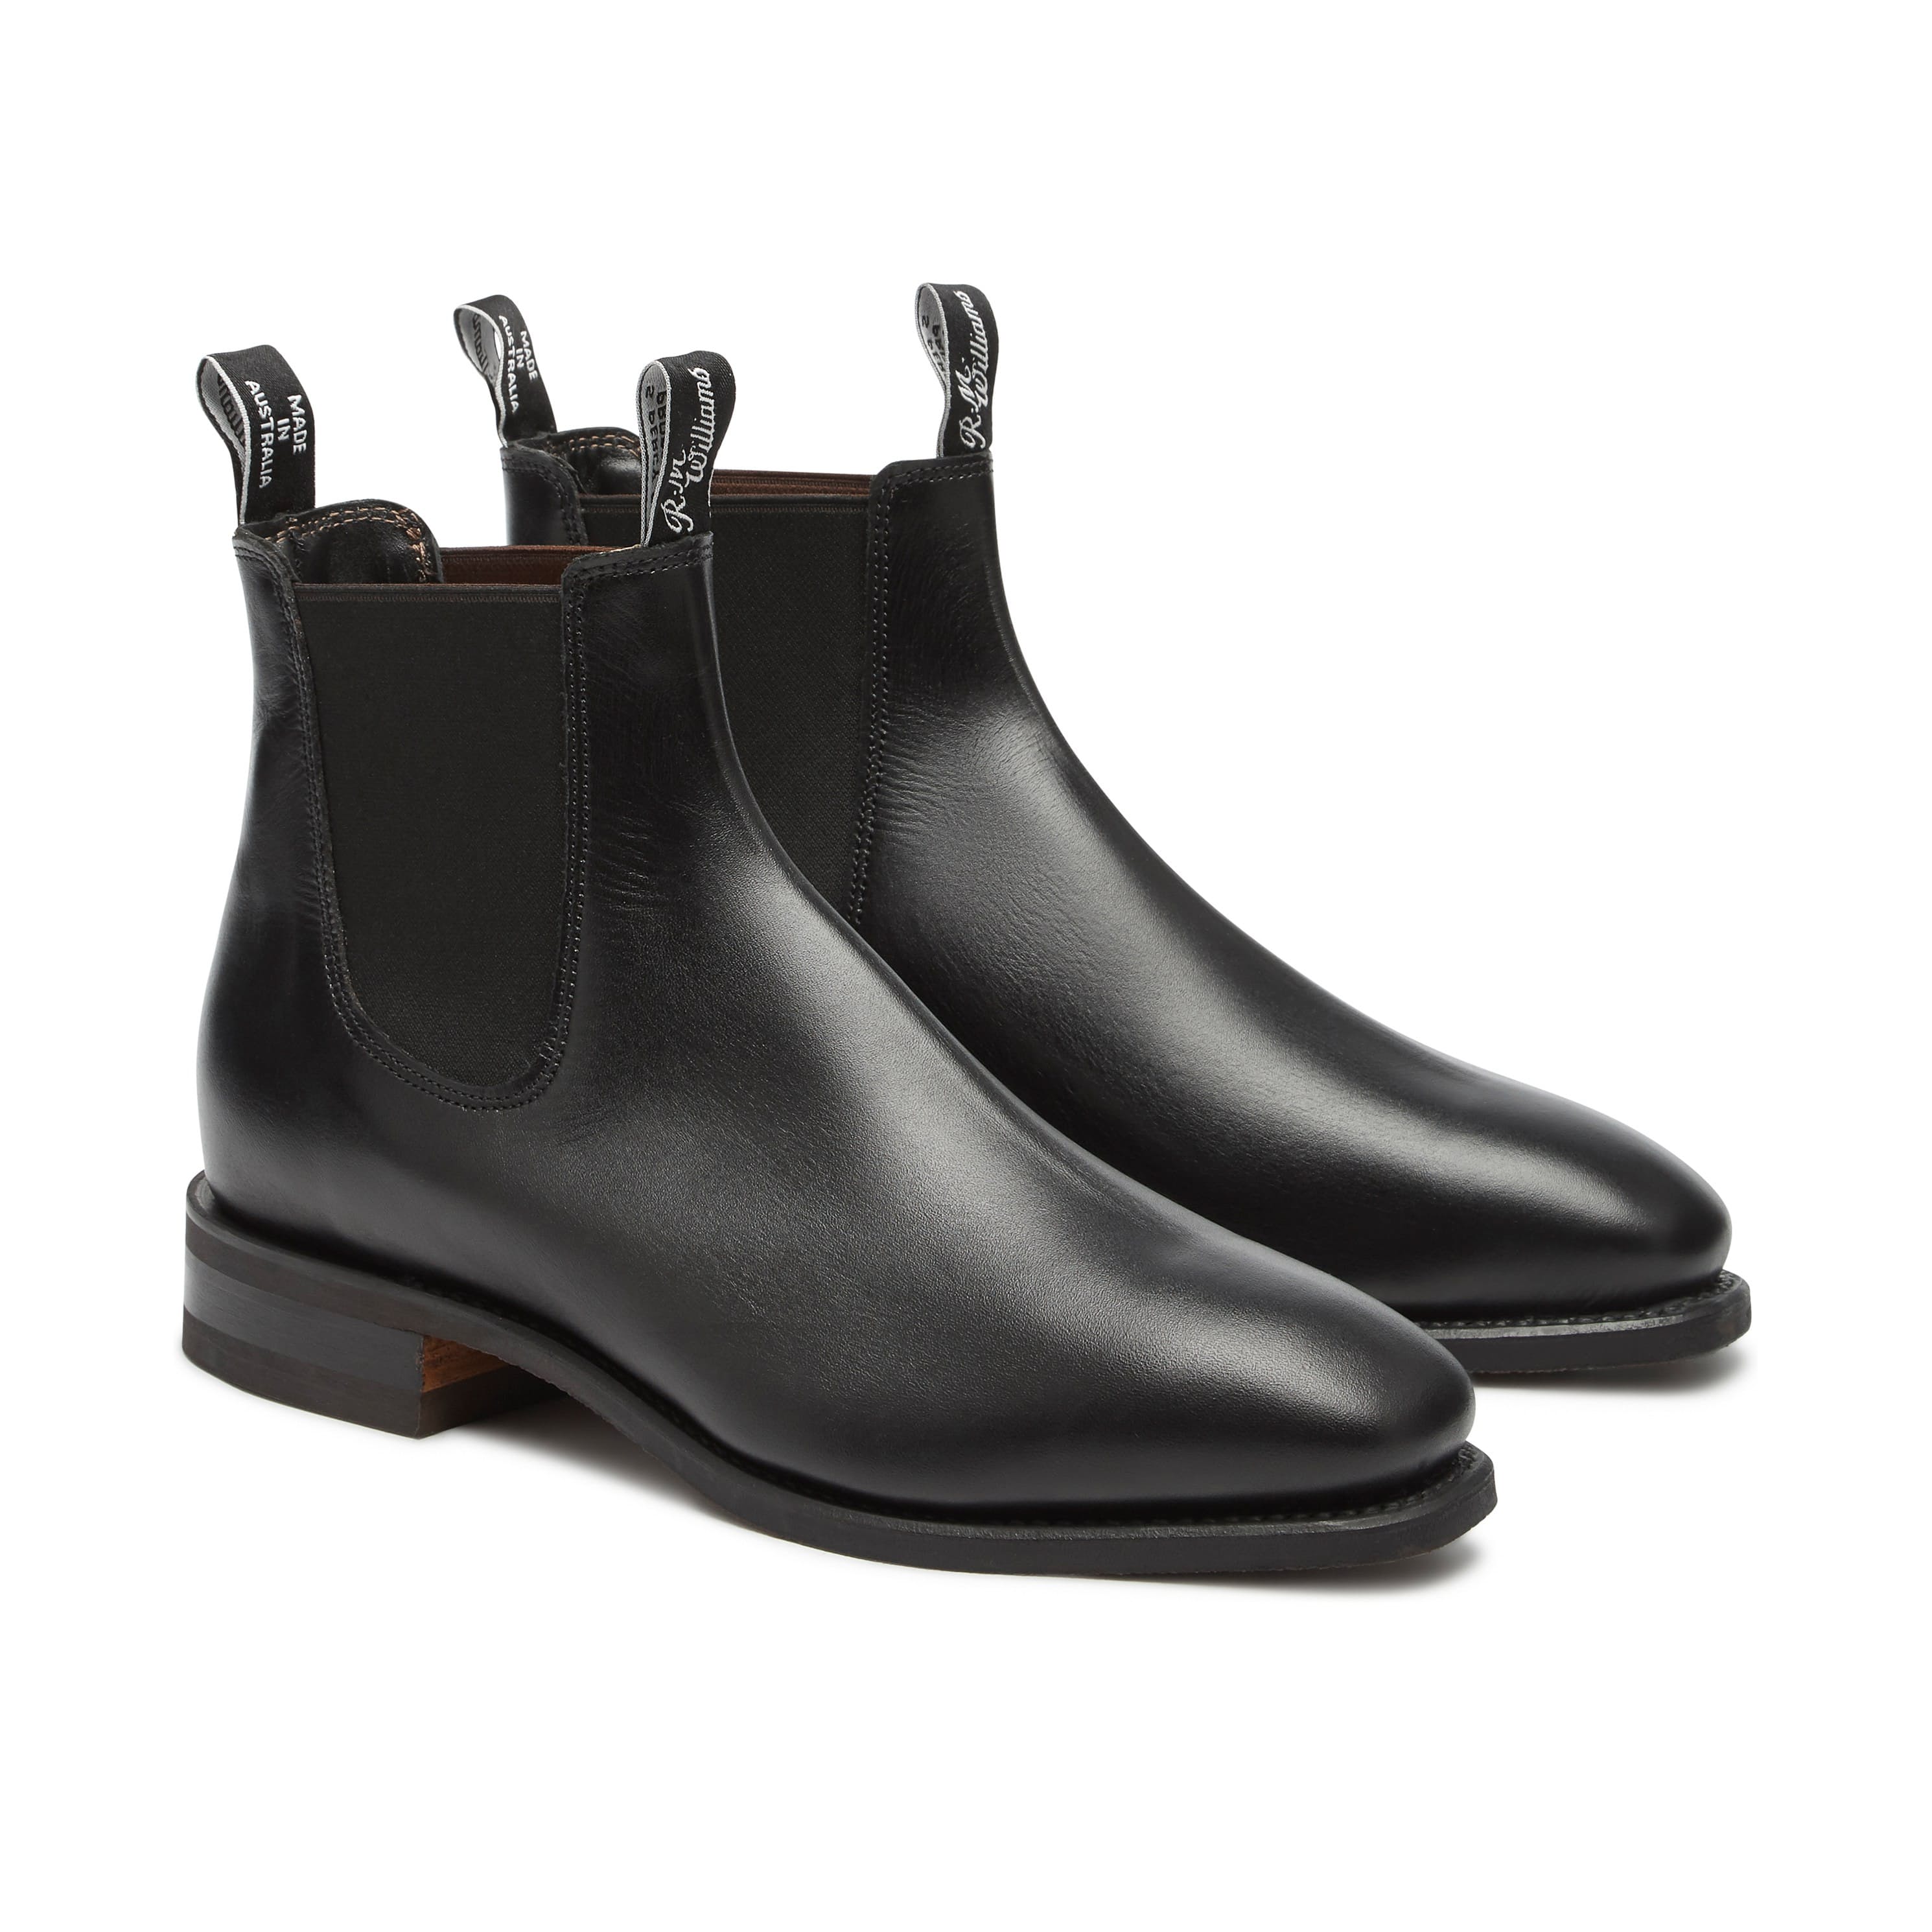 RM WILLIAMS Men's Comfort Craftsman Boots. Size 8 HCF